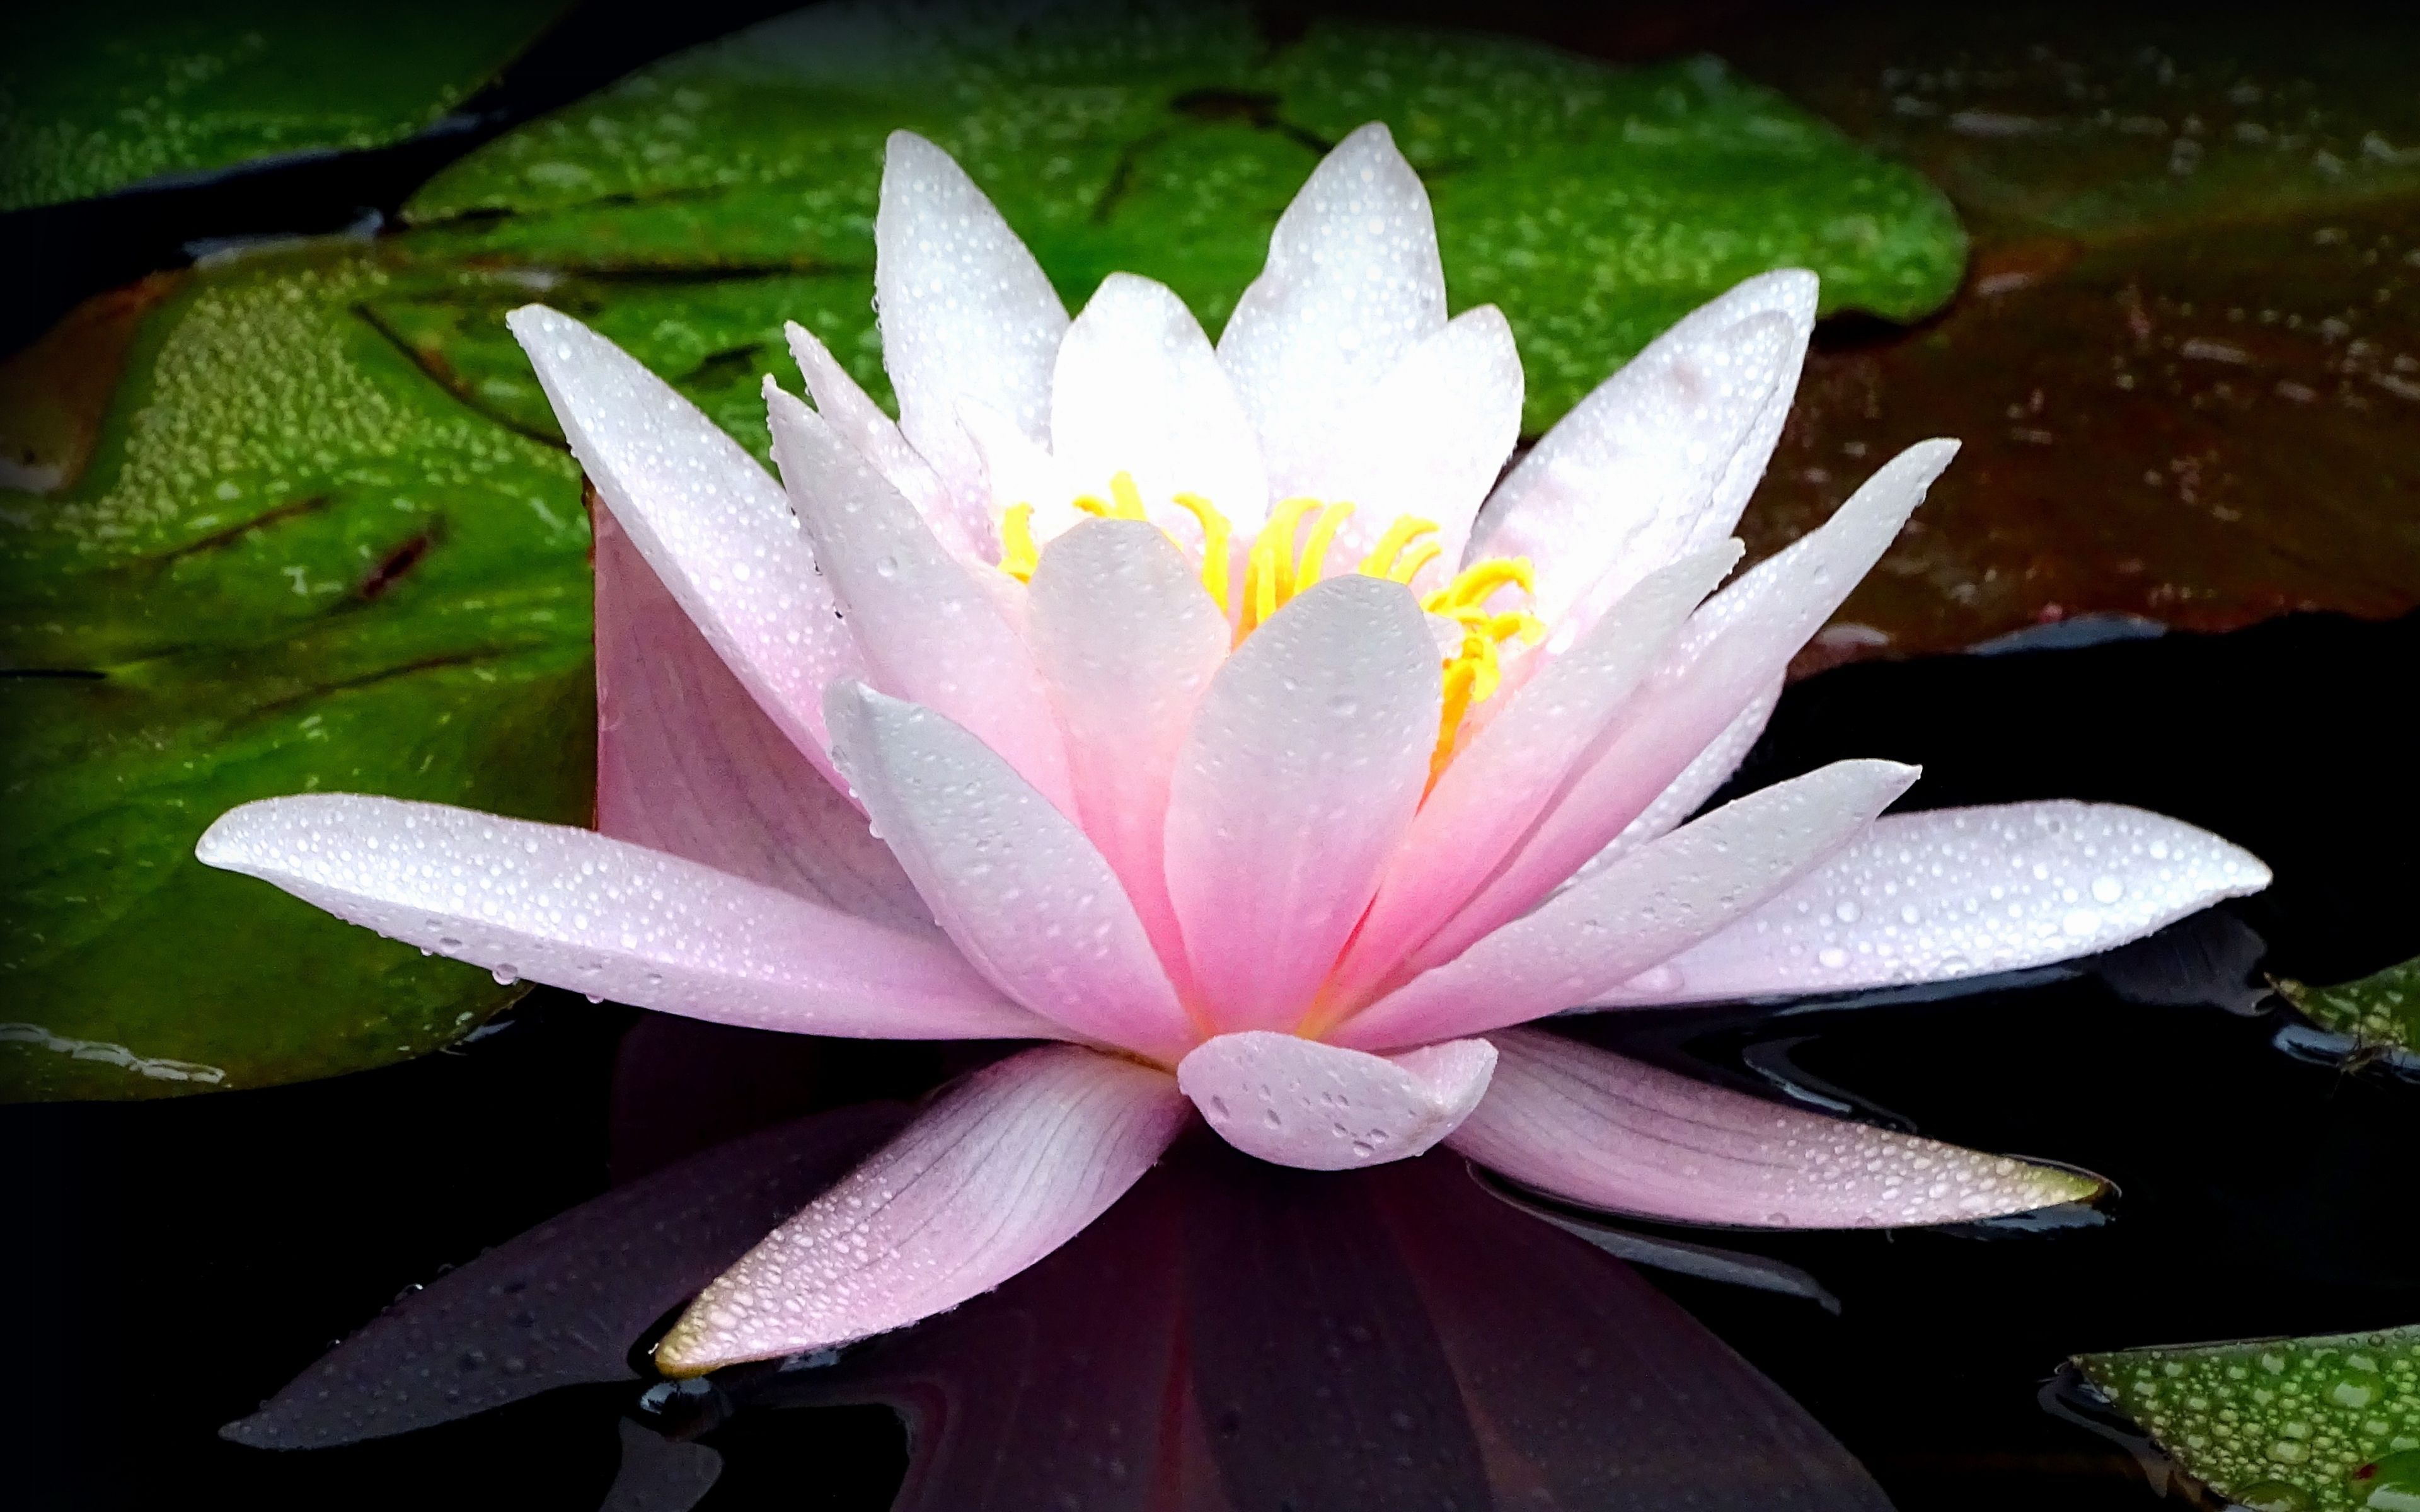 Download 3840x2400 wallpaper pink flower, lotus, flower, lake, bloom, water drops, 4k, ultra HD 16: widescreen, 3840x2400 HD image, background, 9512